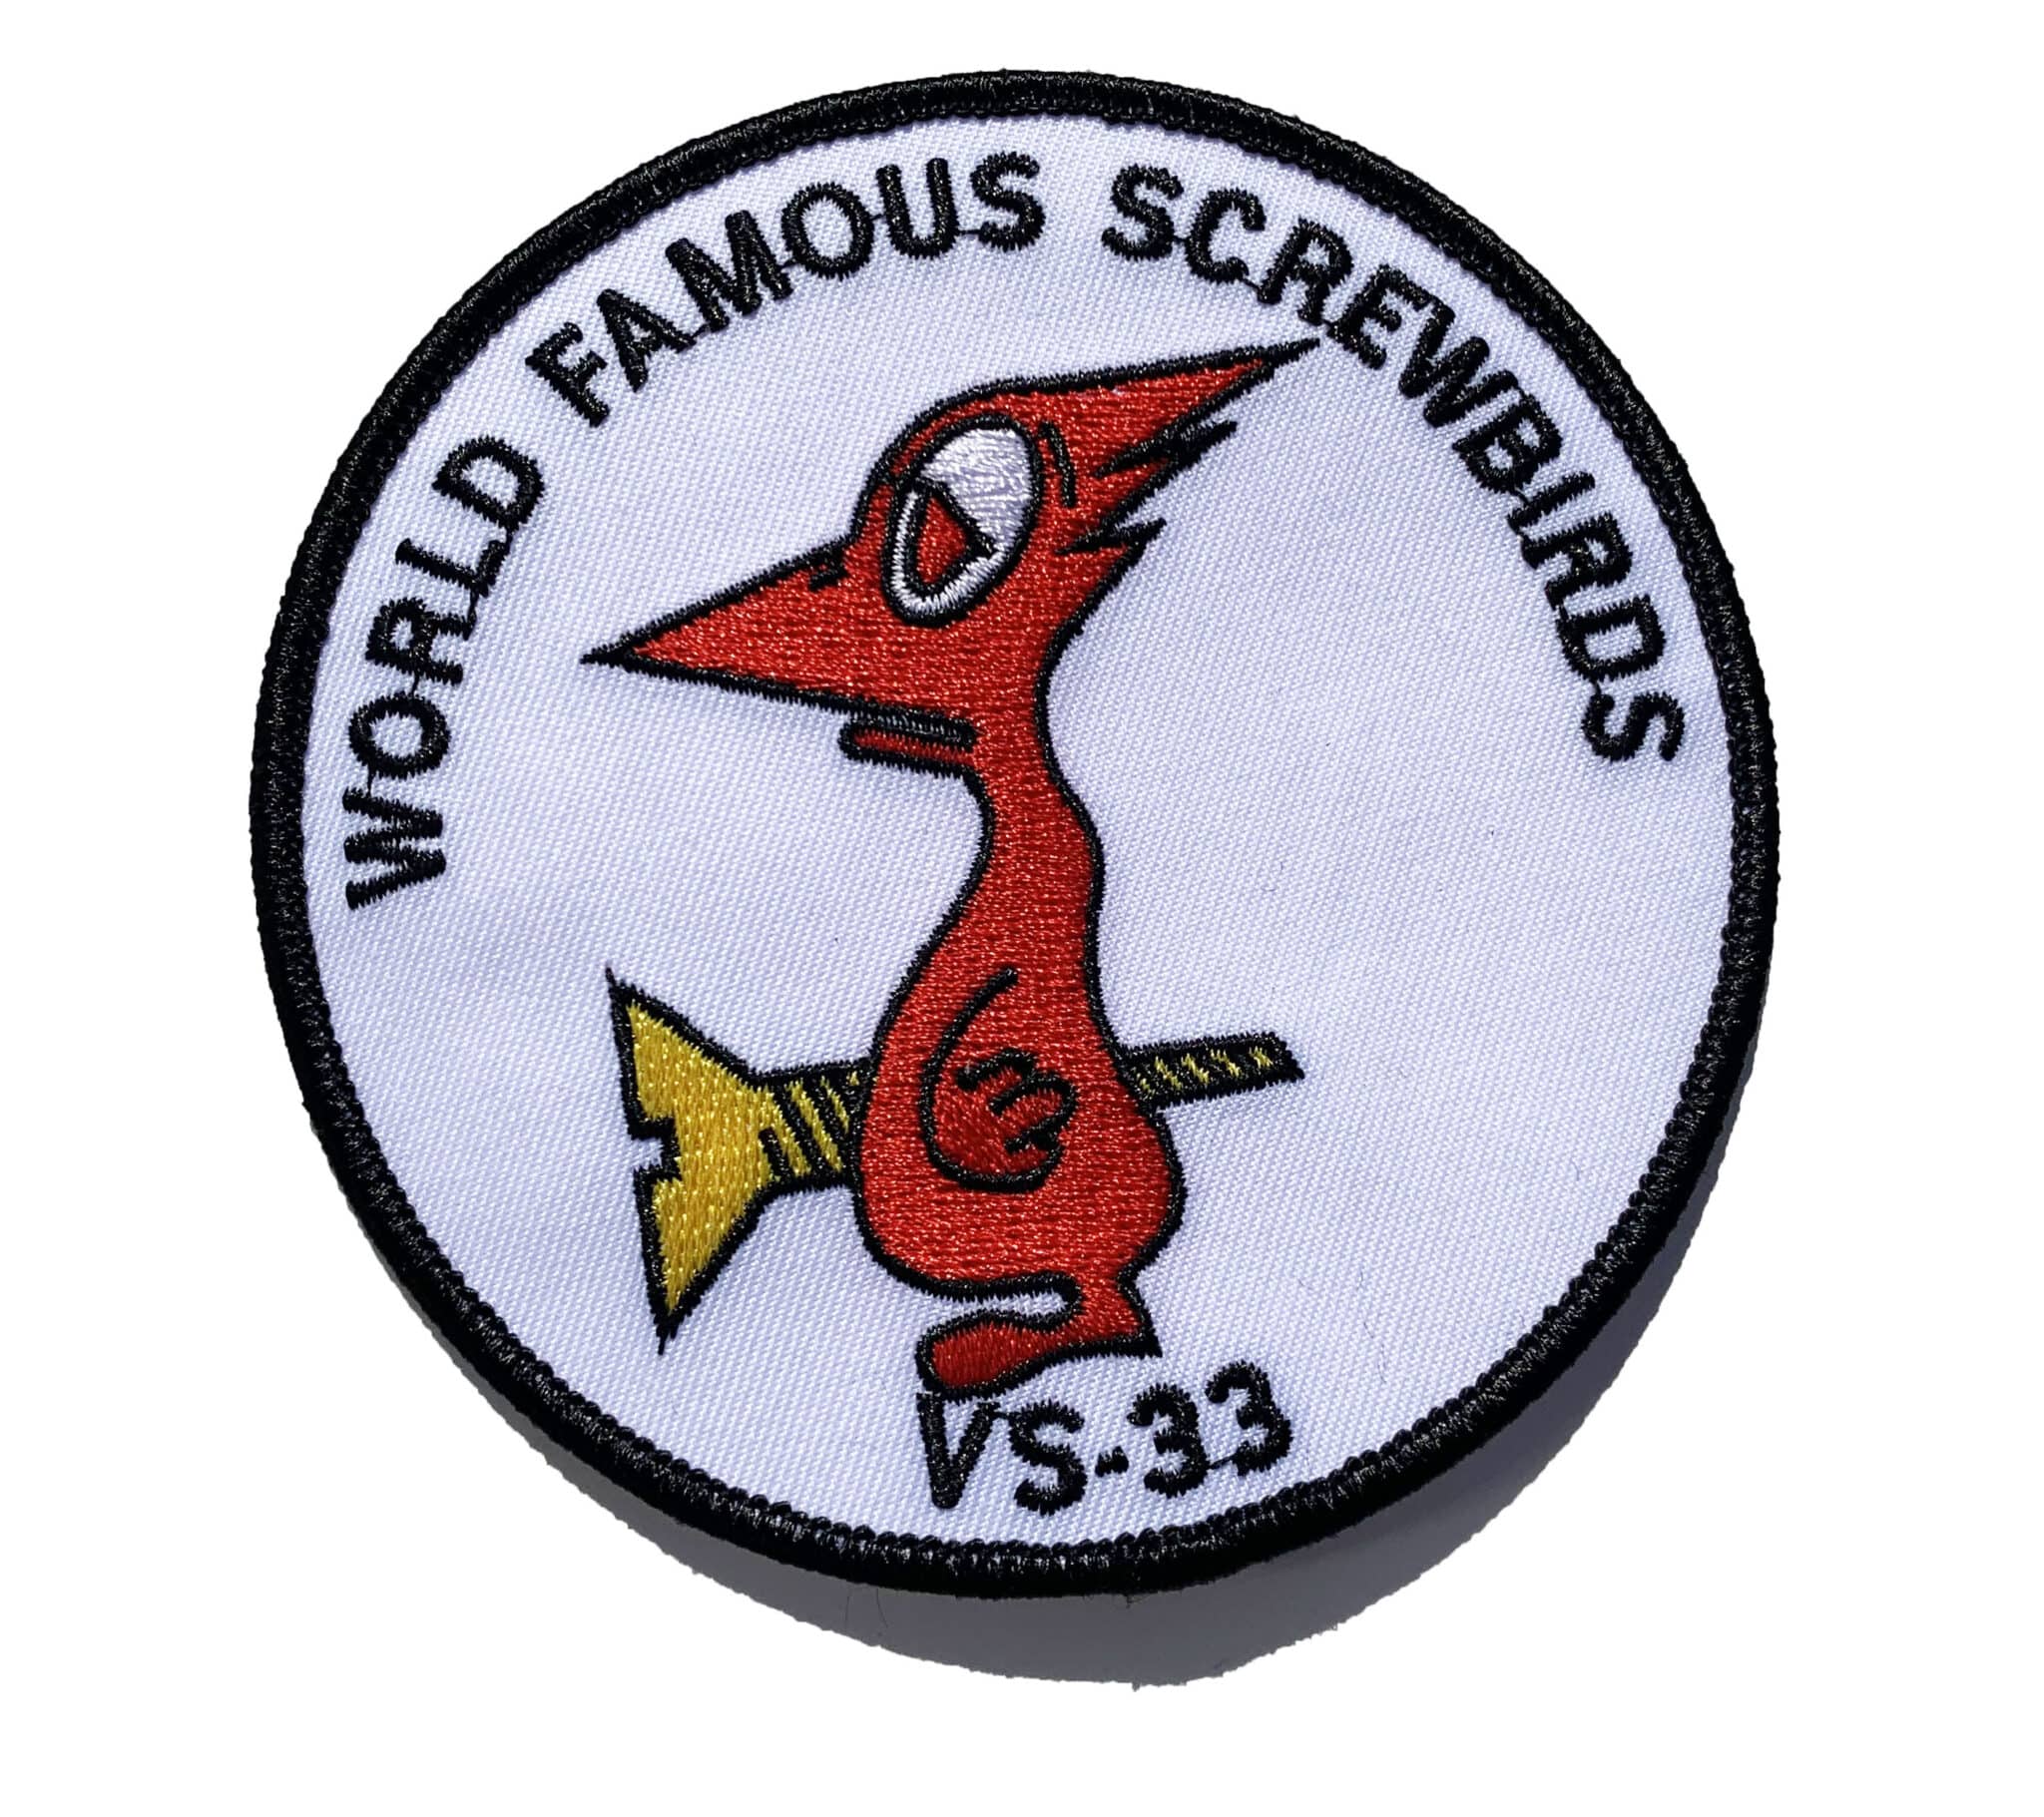 VS-33 Screwbirds Squadron Patch – Sew On